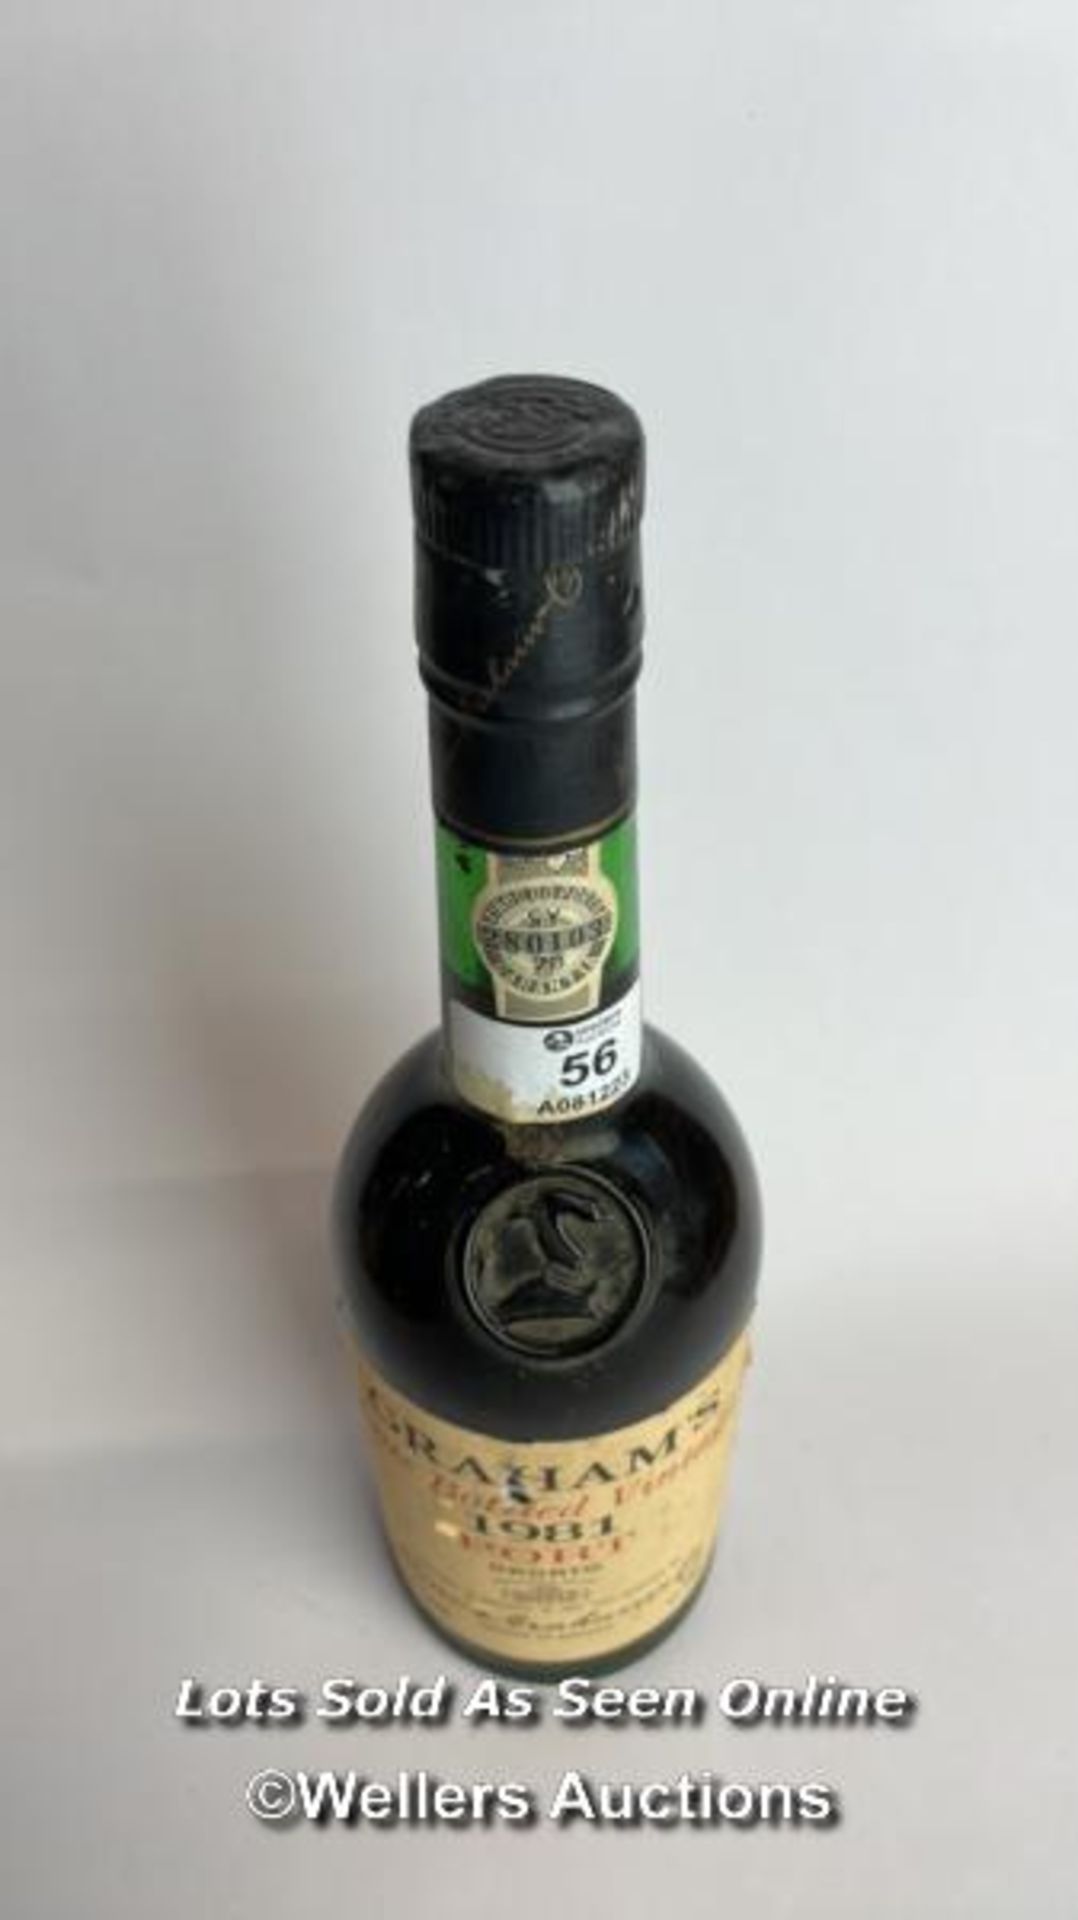 Graham's Late bottled vintage 1981 port, 70cl, 20% vol / Please see images for fill level and - Bild 5 aus 7